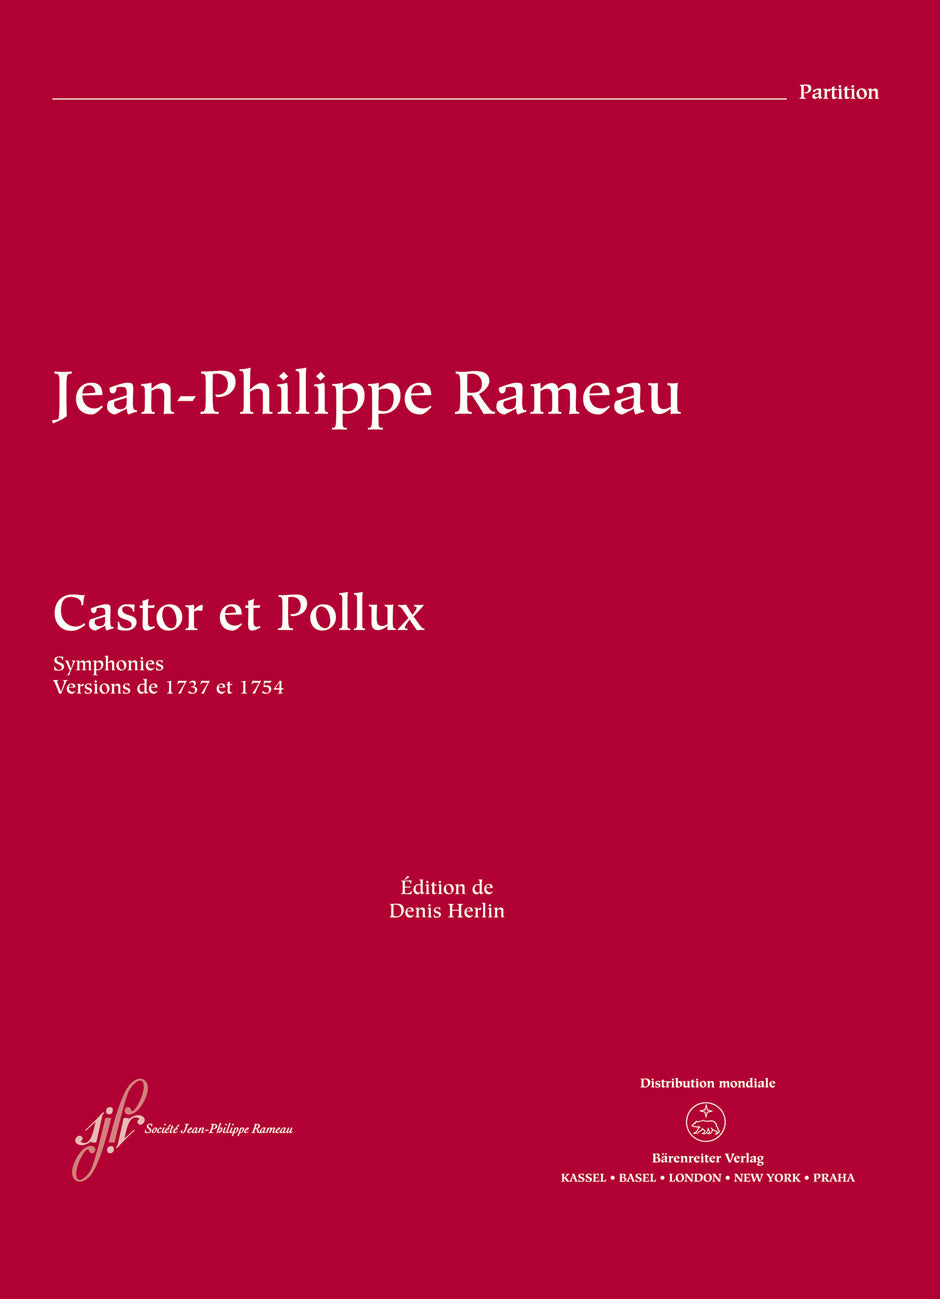 Rameau Castor et Pollux Symphonies - Full Score